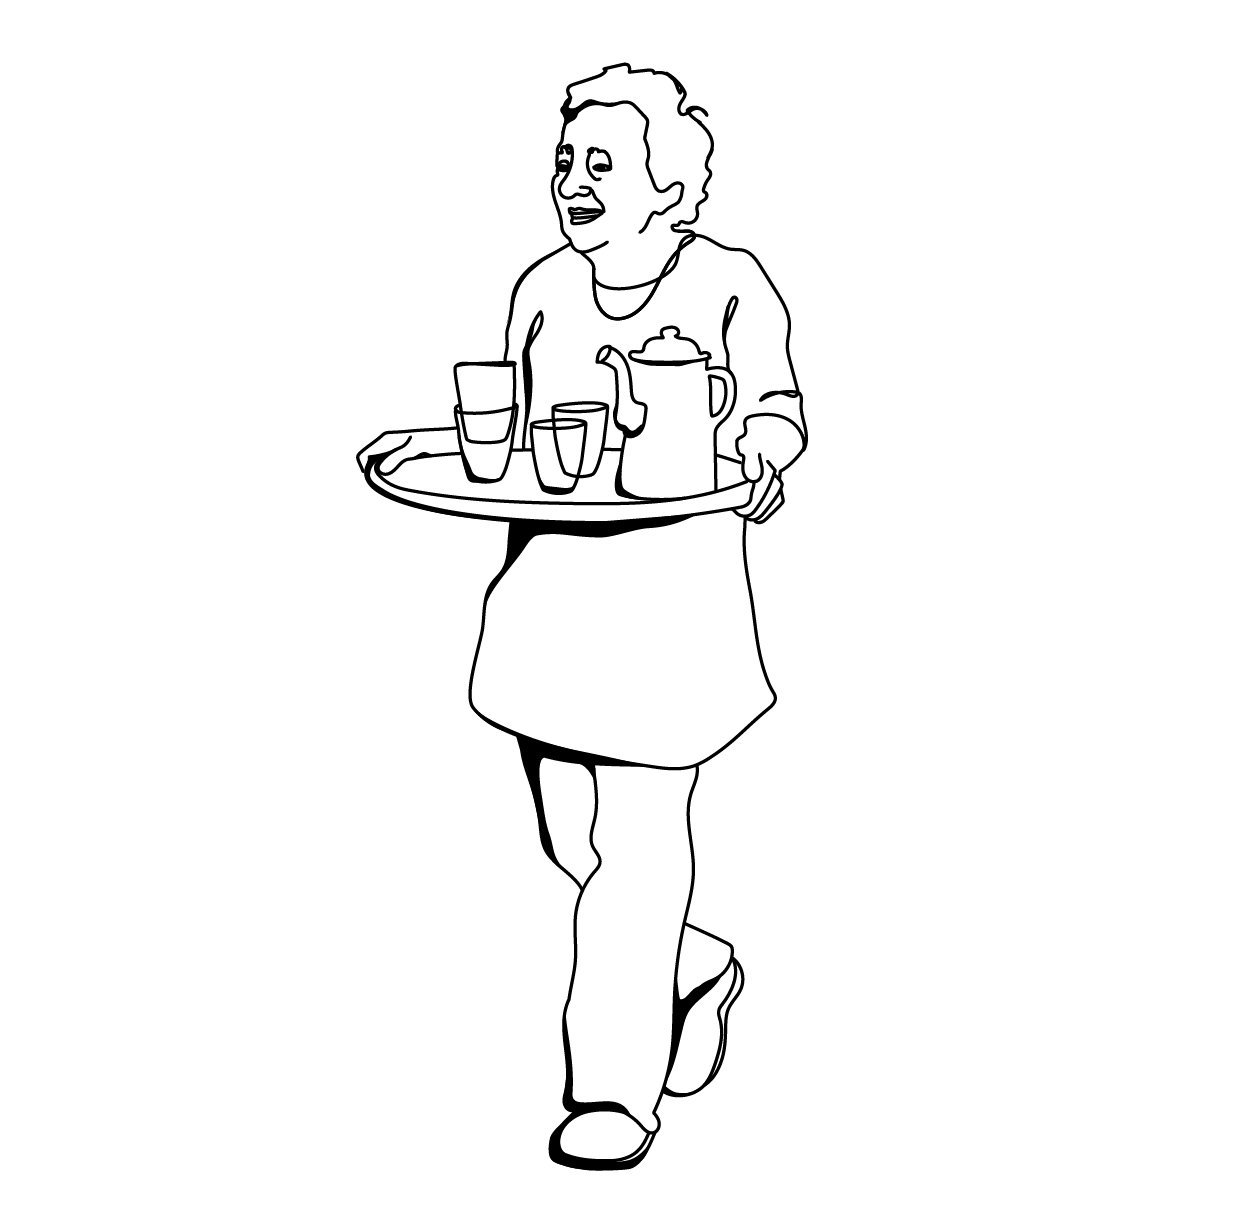 old-woman-carrying-tray-illustration-christina-heitmann.jpg